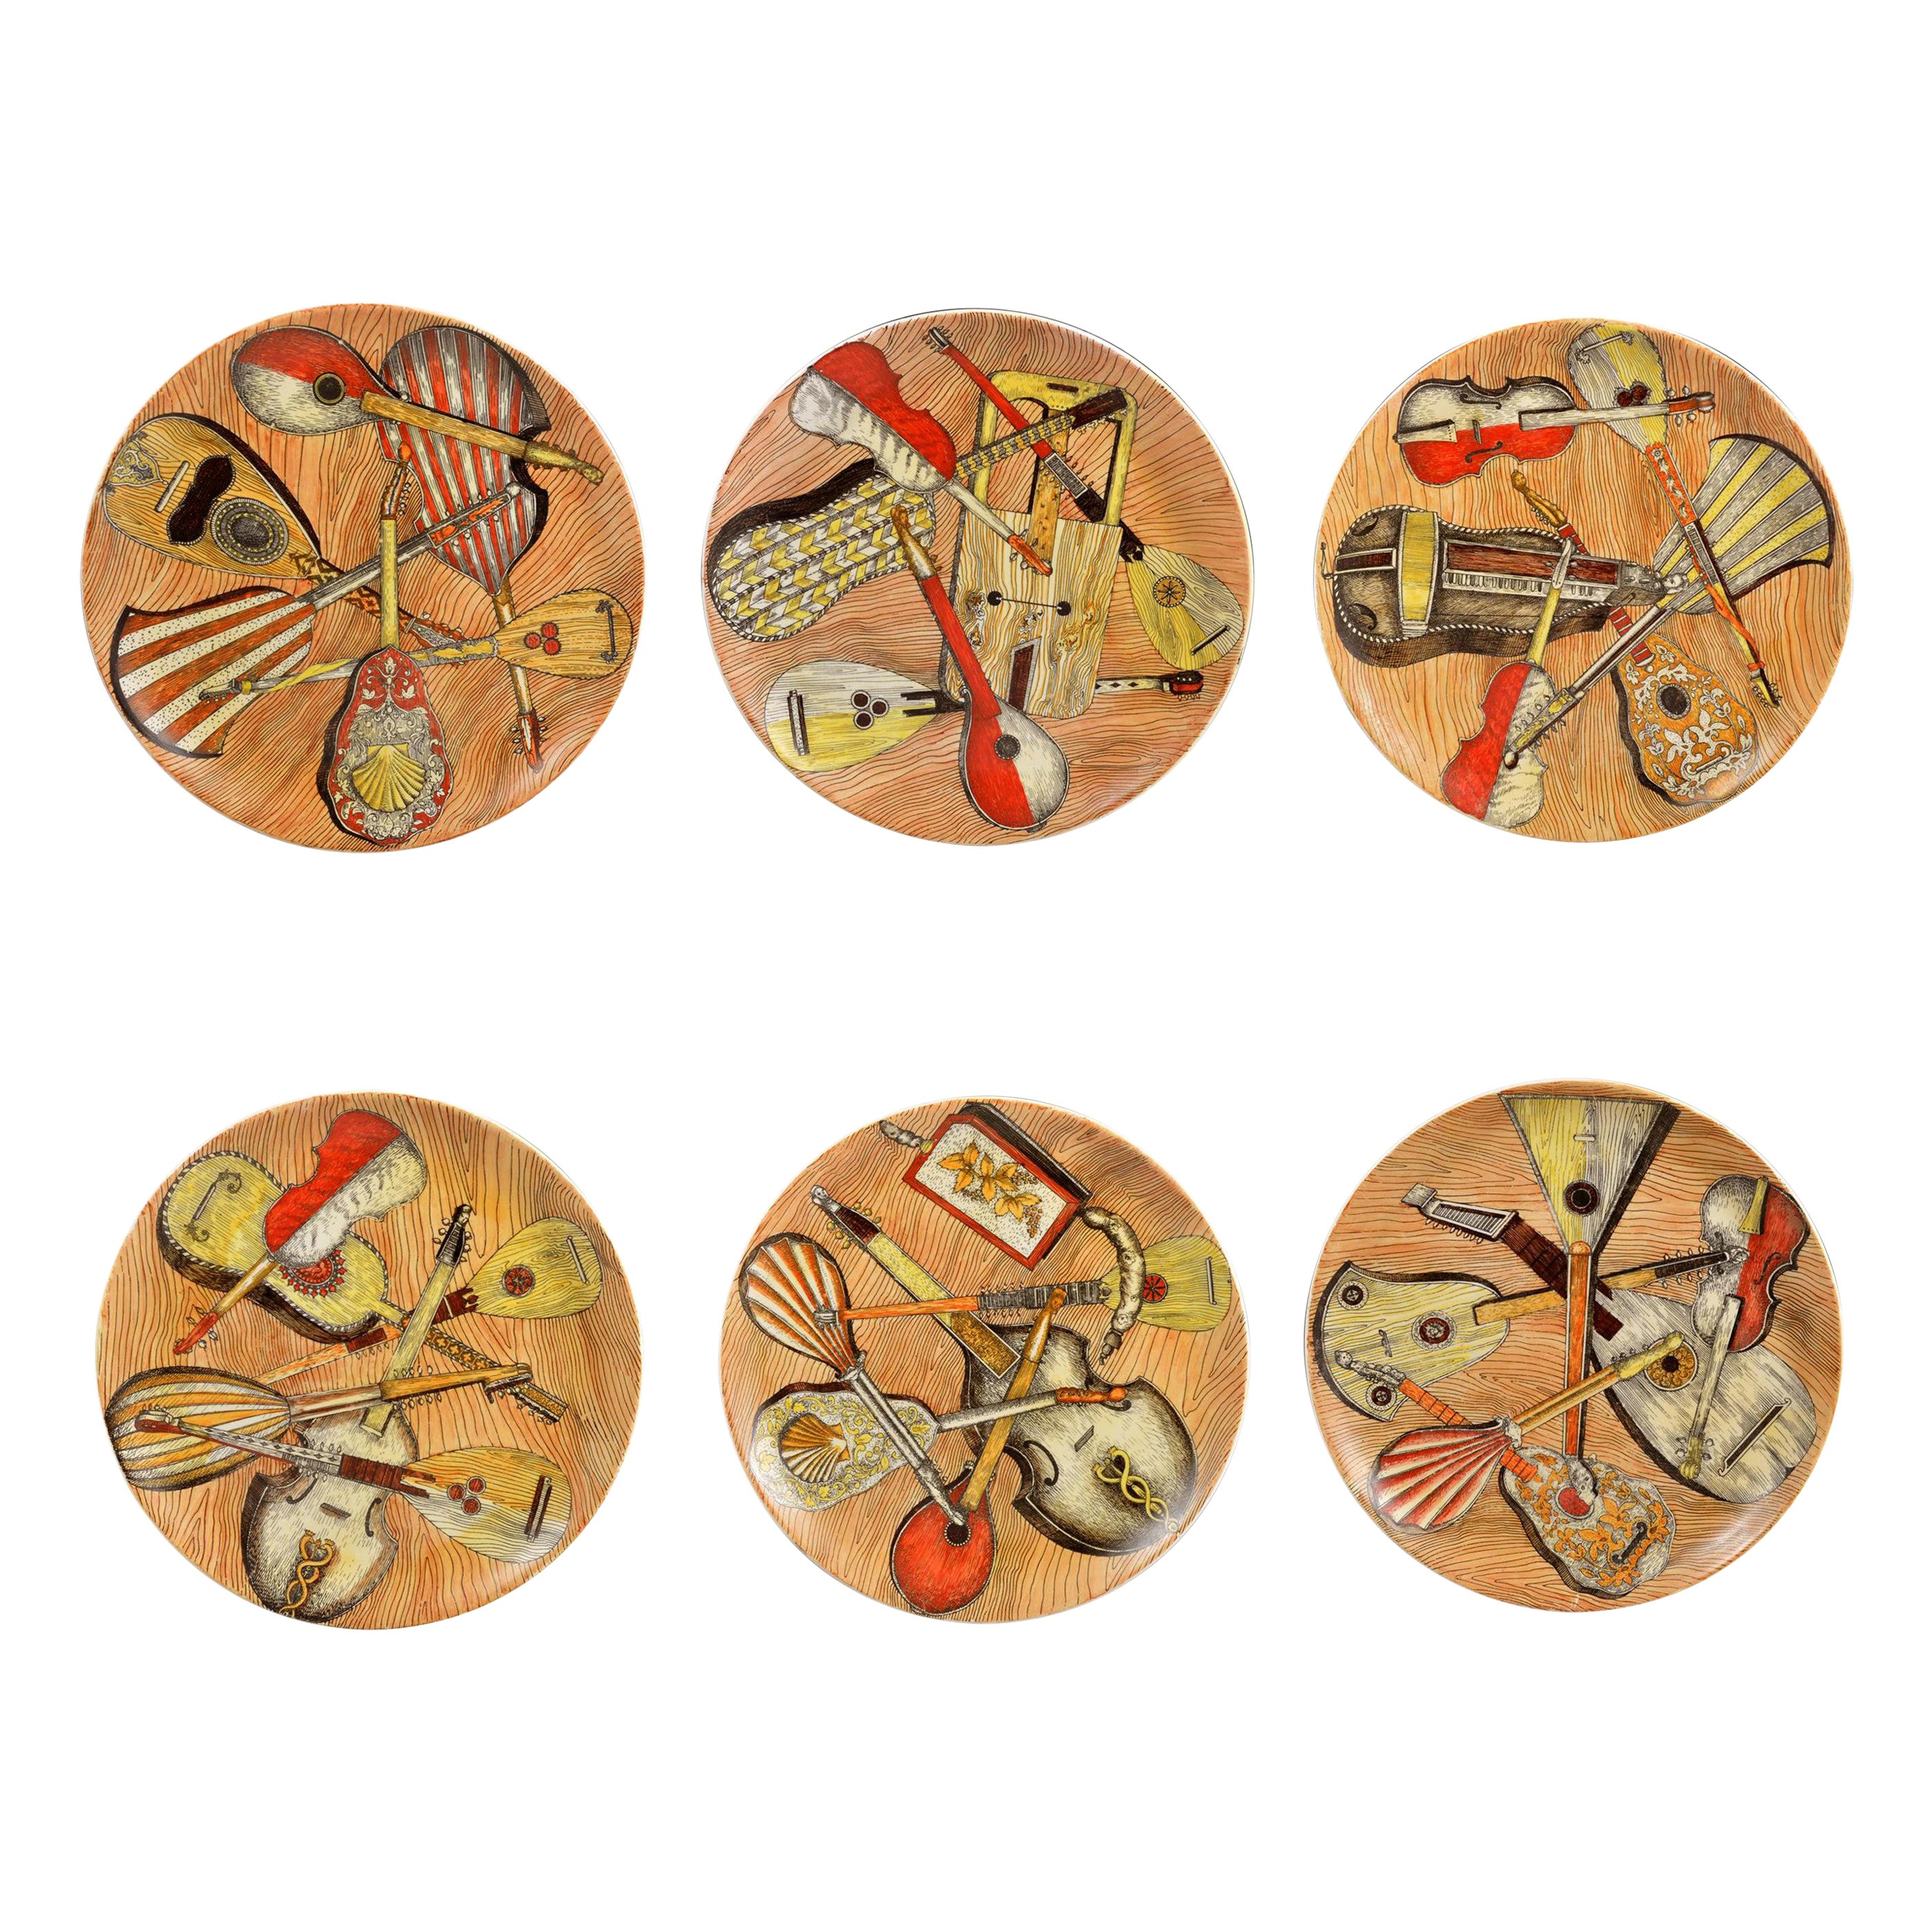 Piero Fornasetti Strumenti Musicali Ceramic Plates, Set of Six